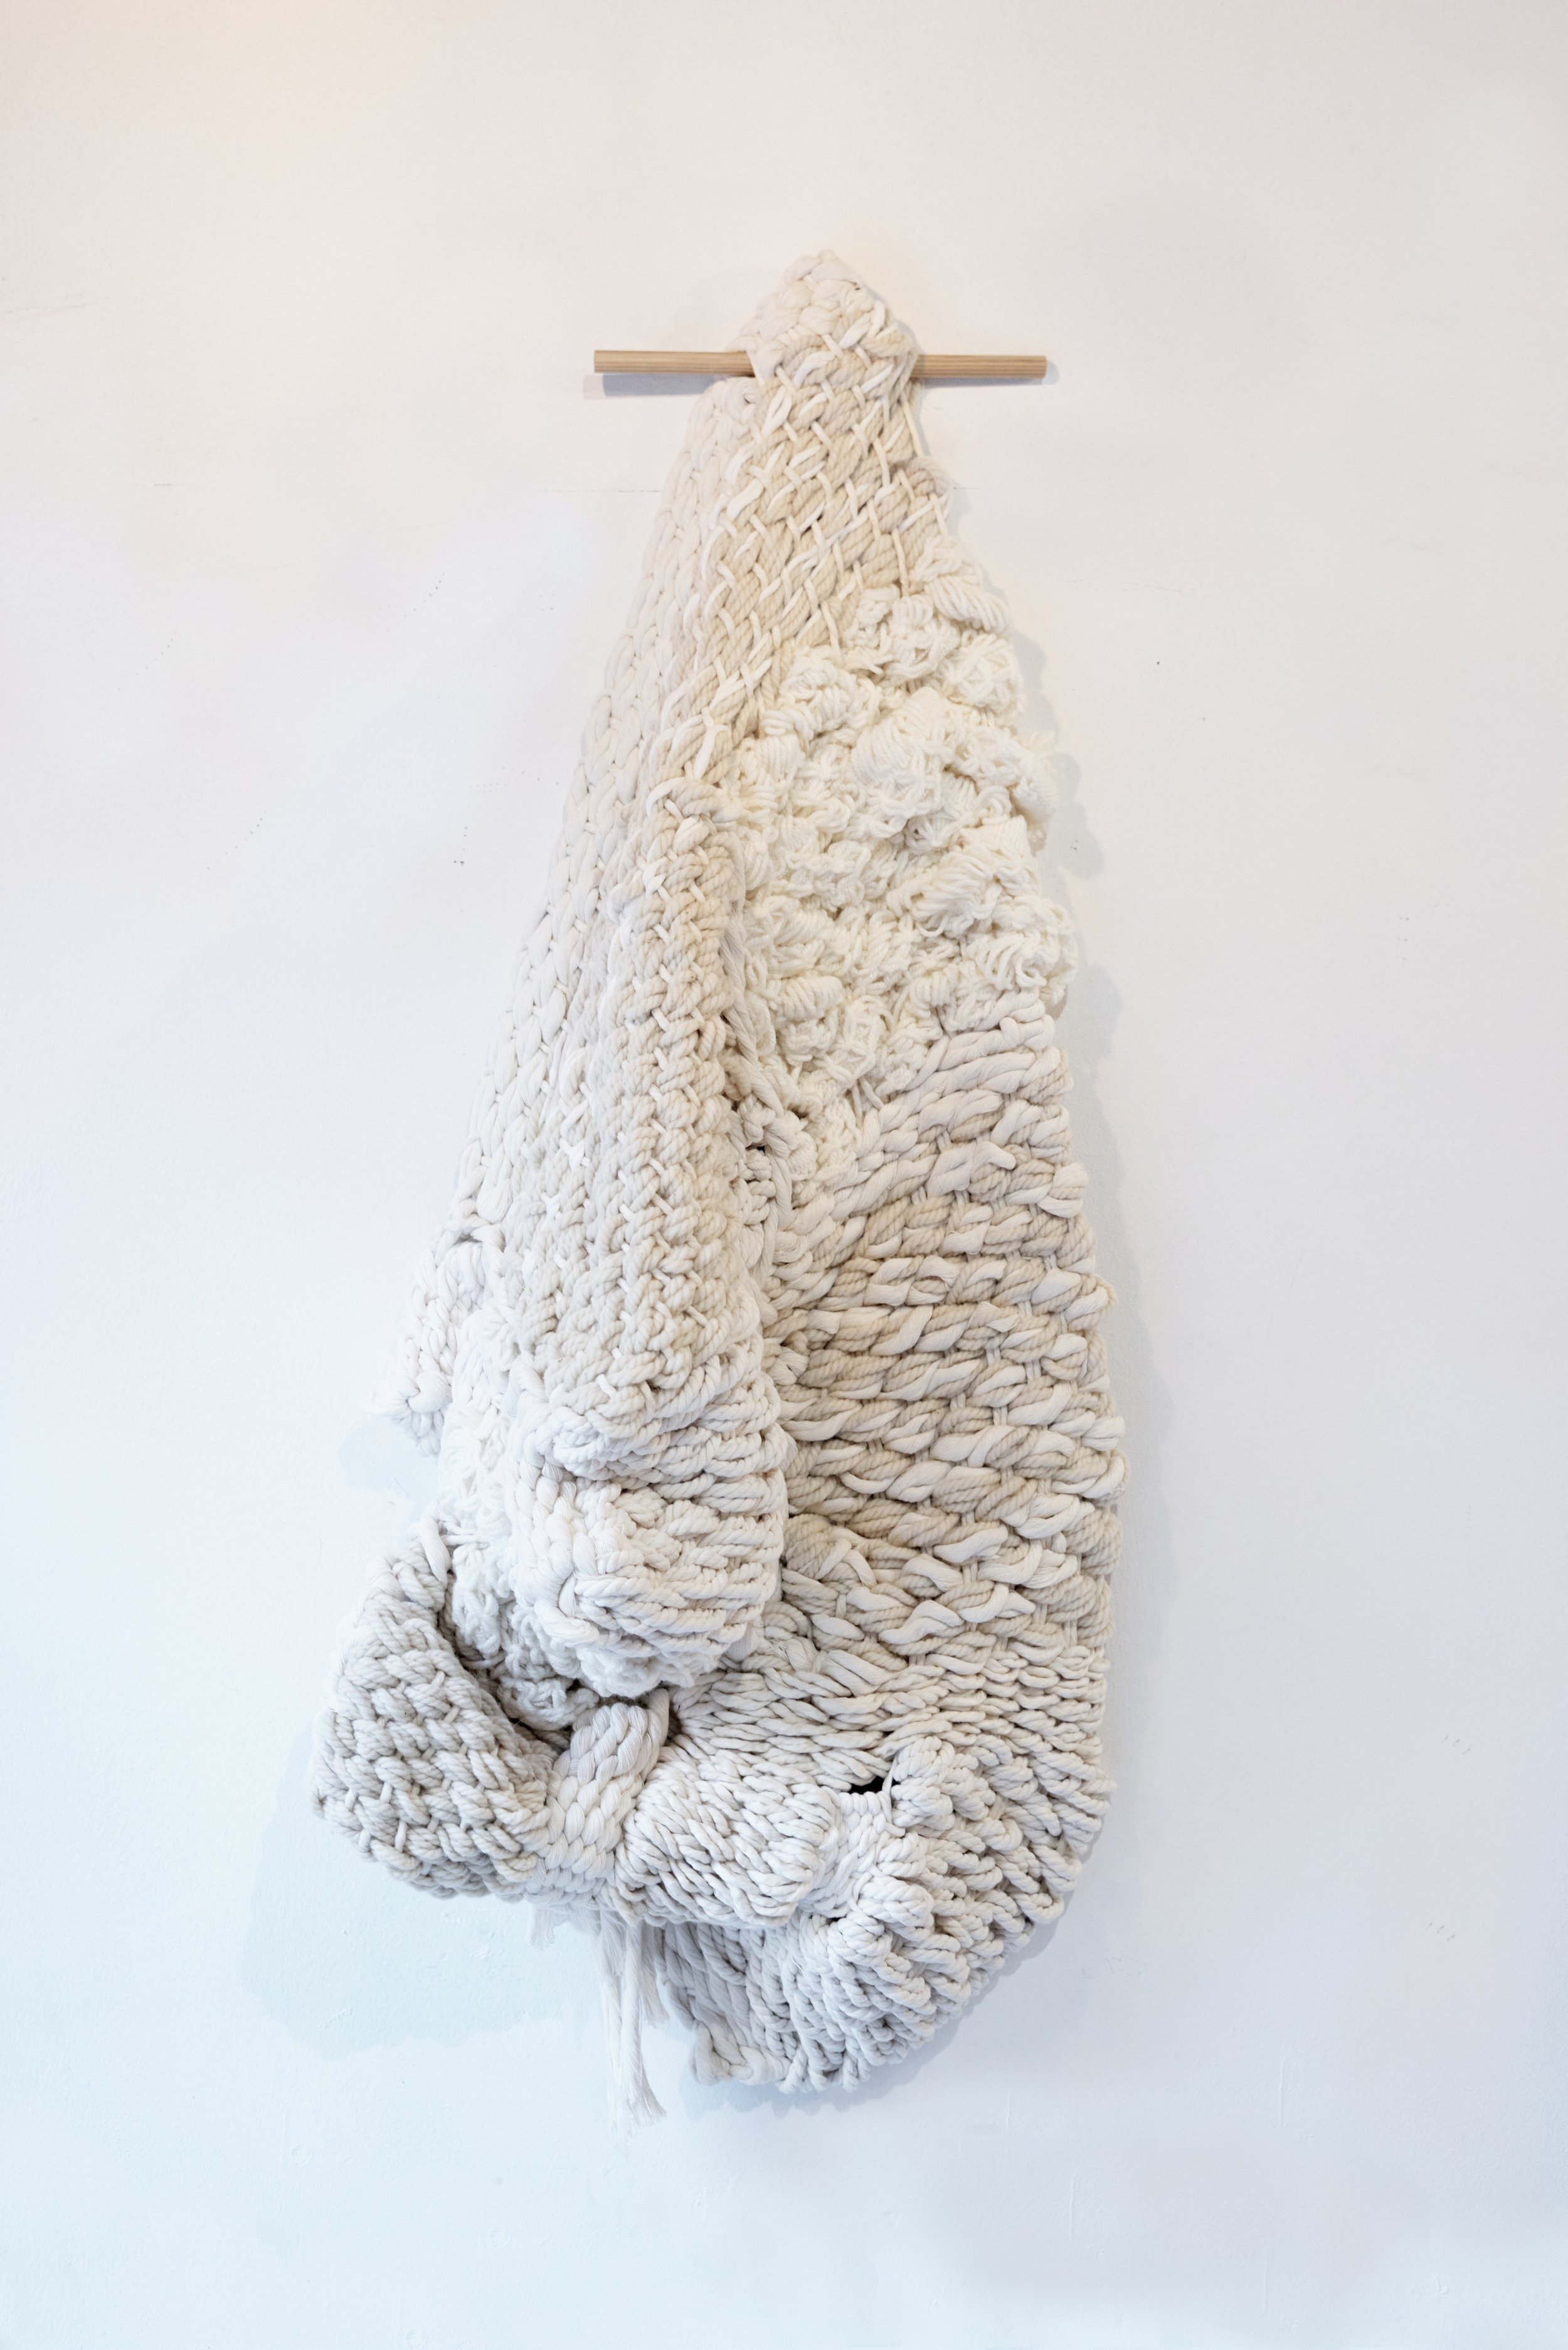 Soft sculpture - the white